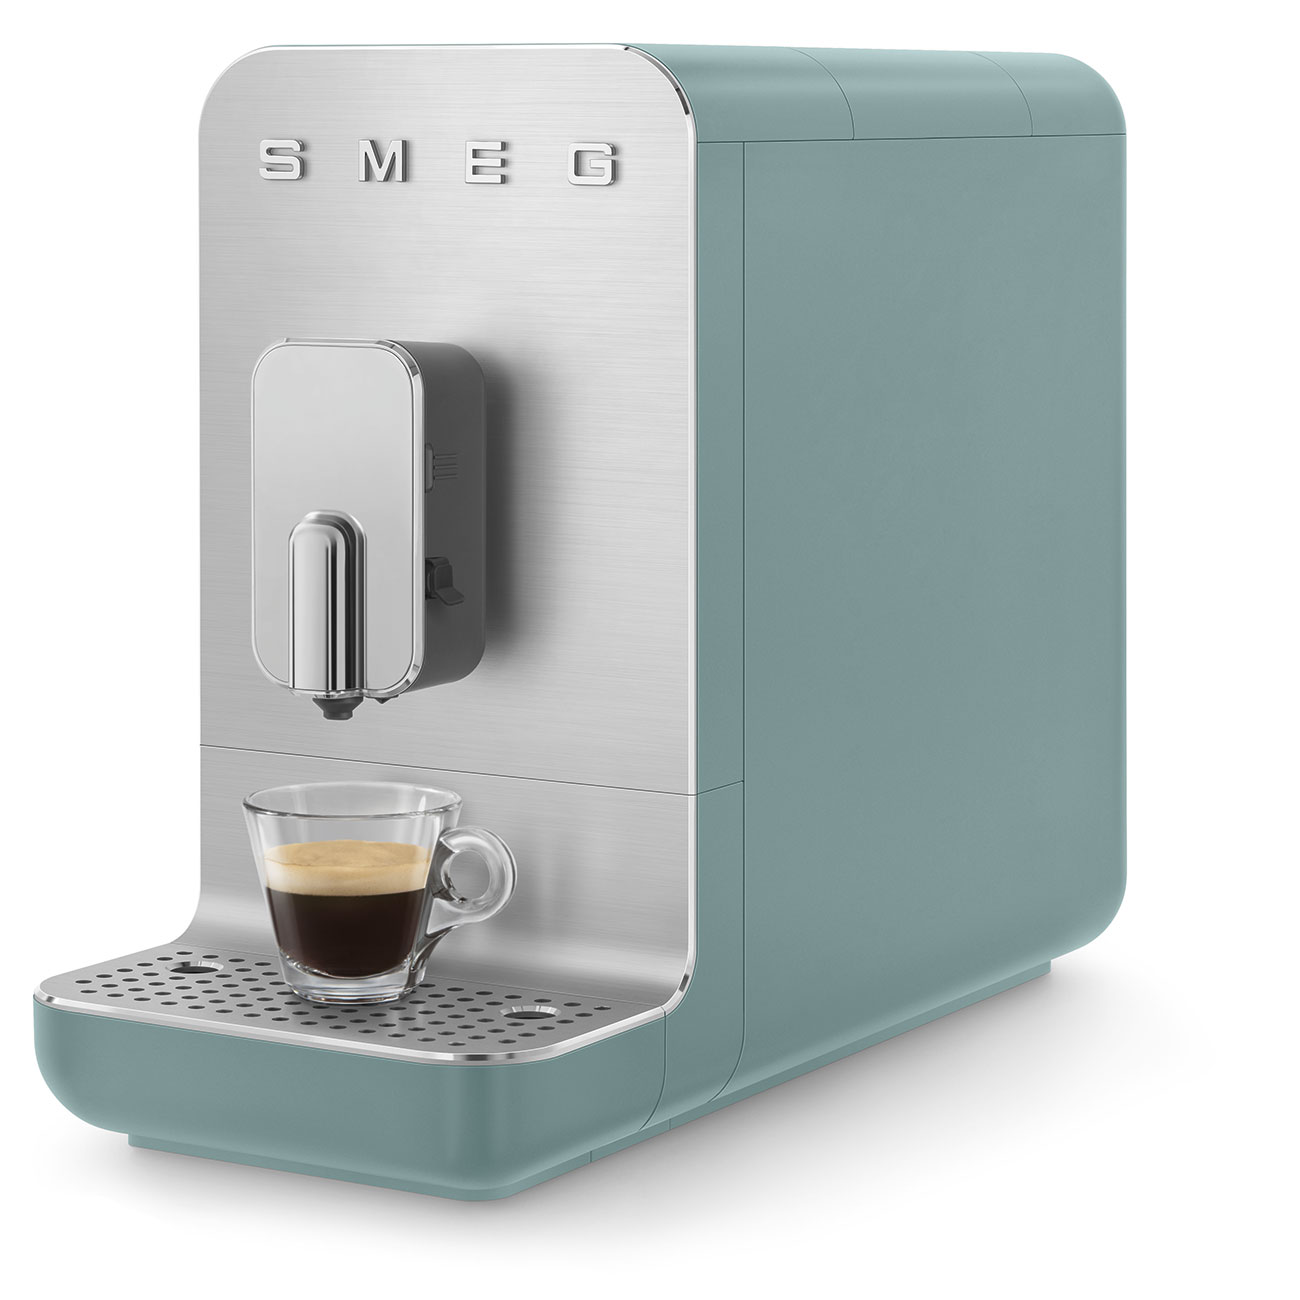 Smeg Emerald green volautomatisch koffiemachine Bean to Cup geïntegreerd melksysteem_10